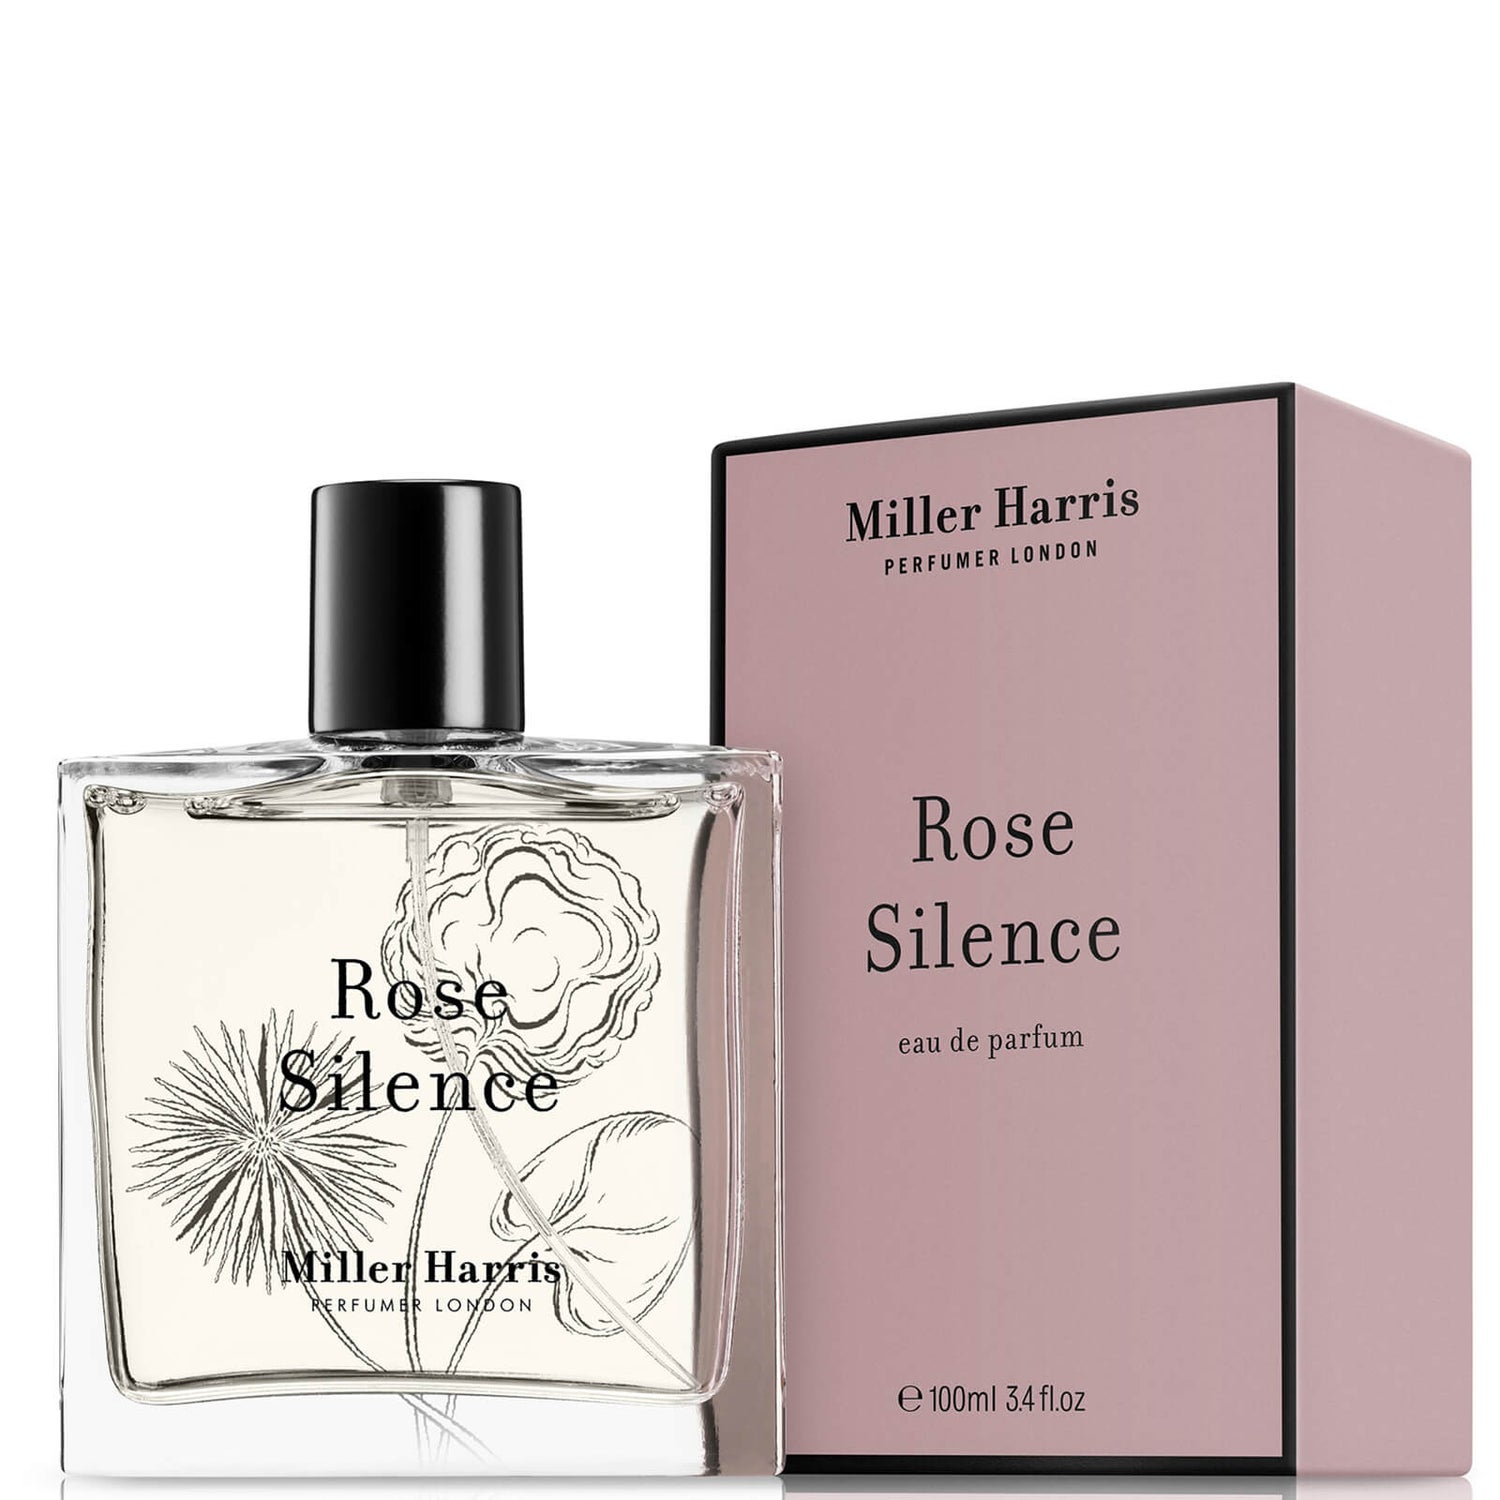 Miller Harris Rose Silence Eau de Parfum 100ml - FREE Delivery